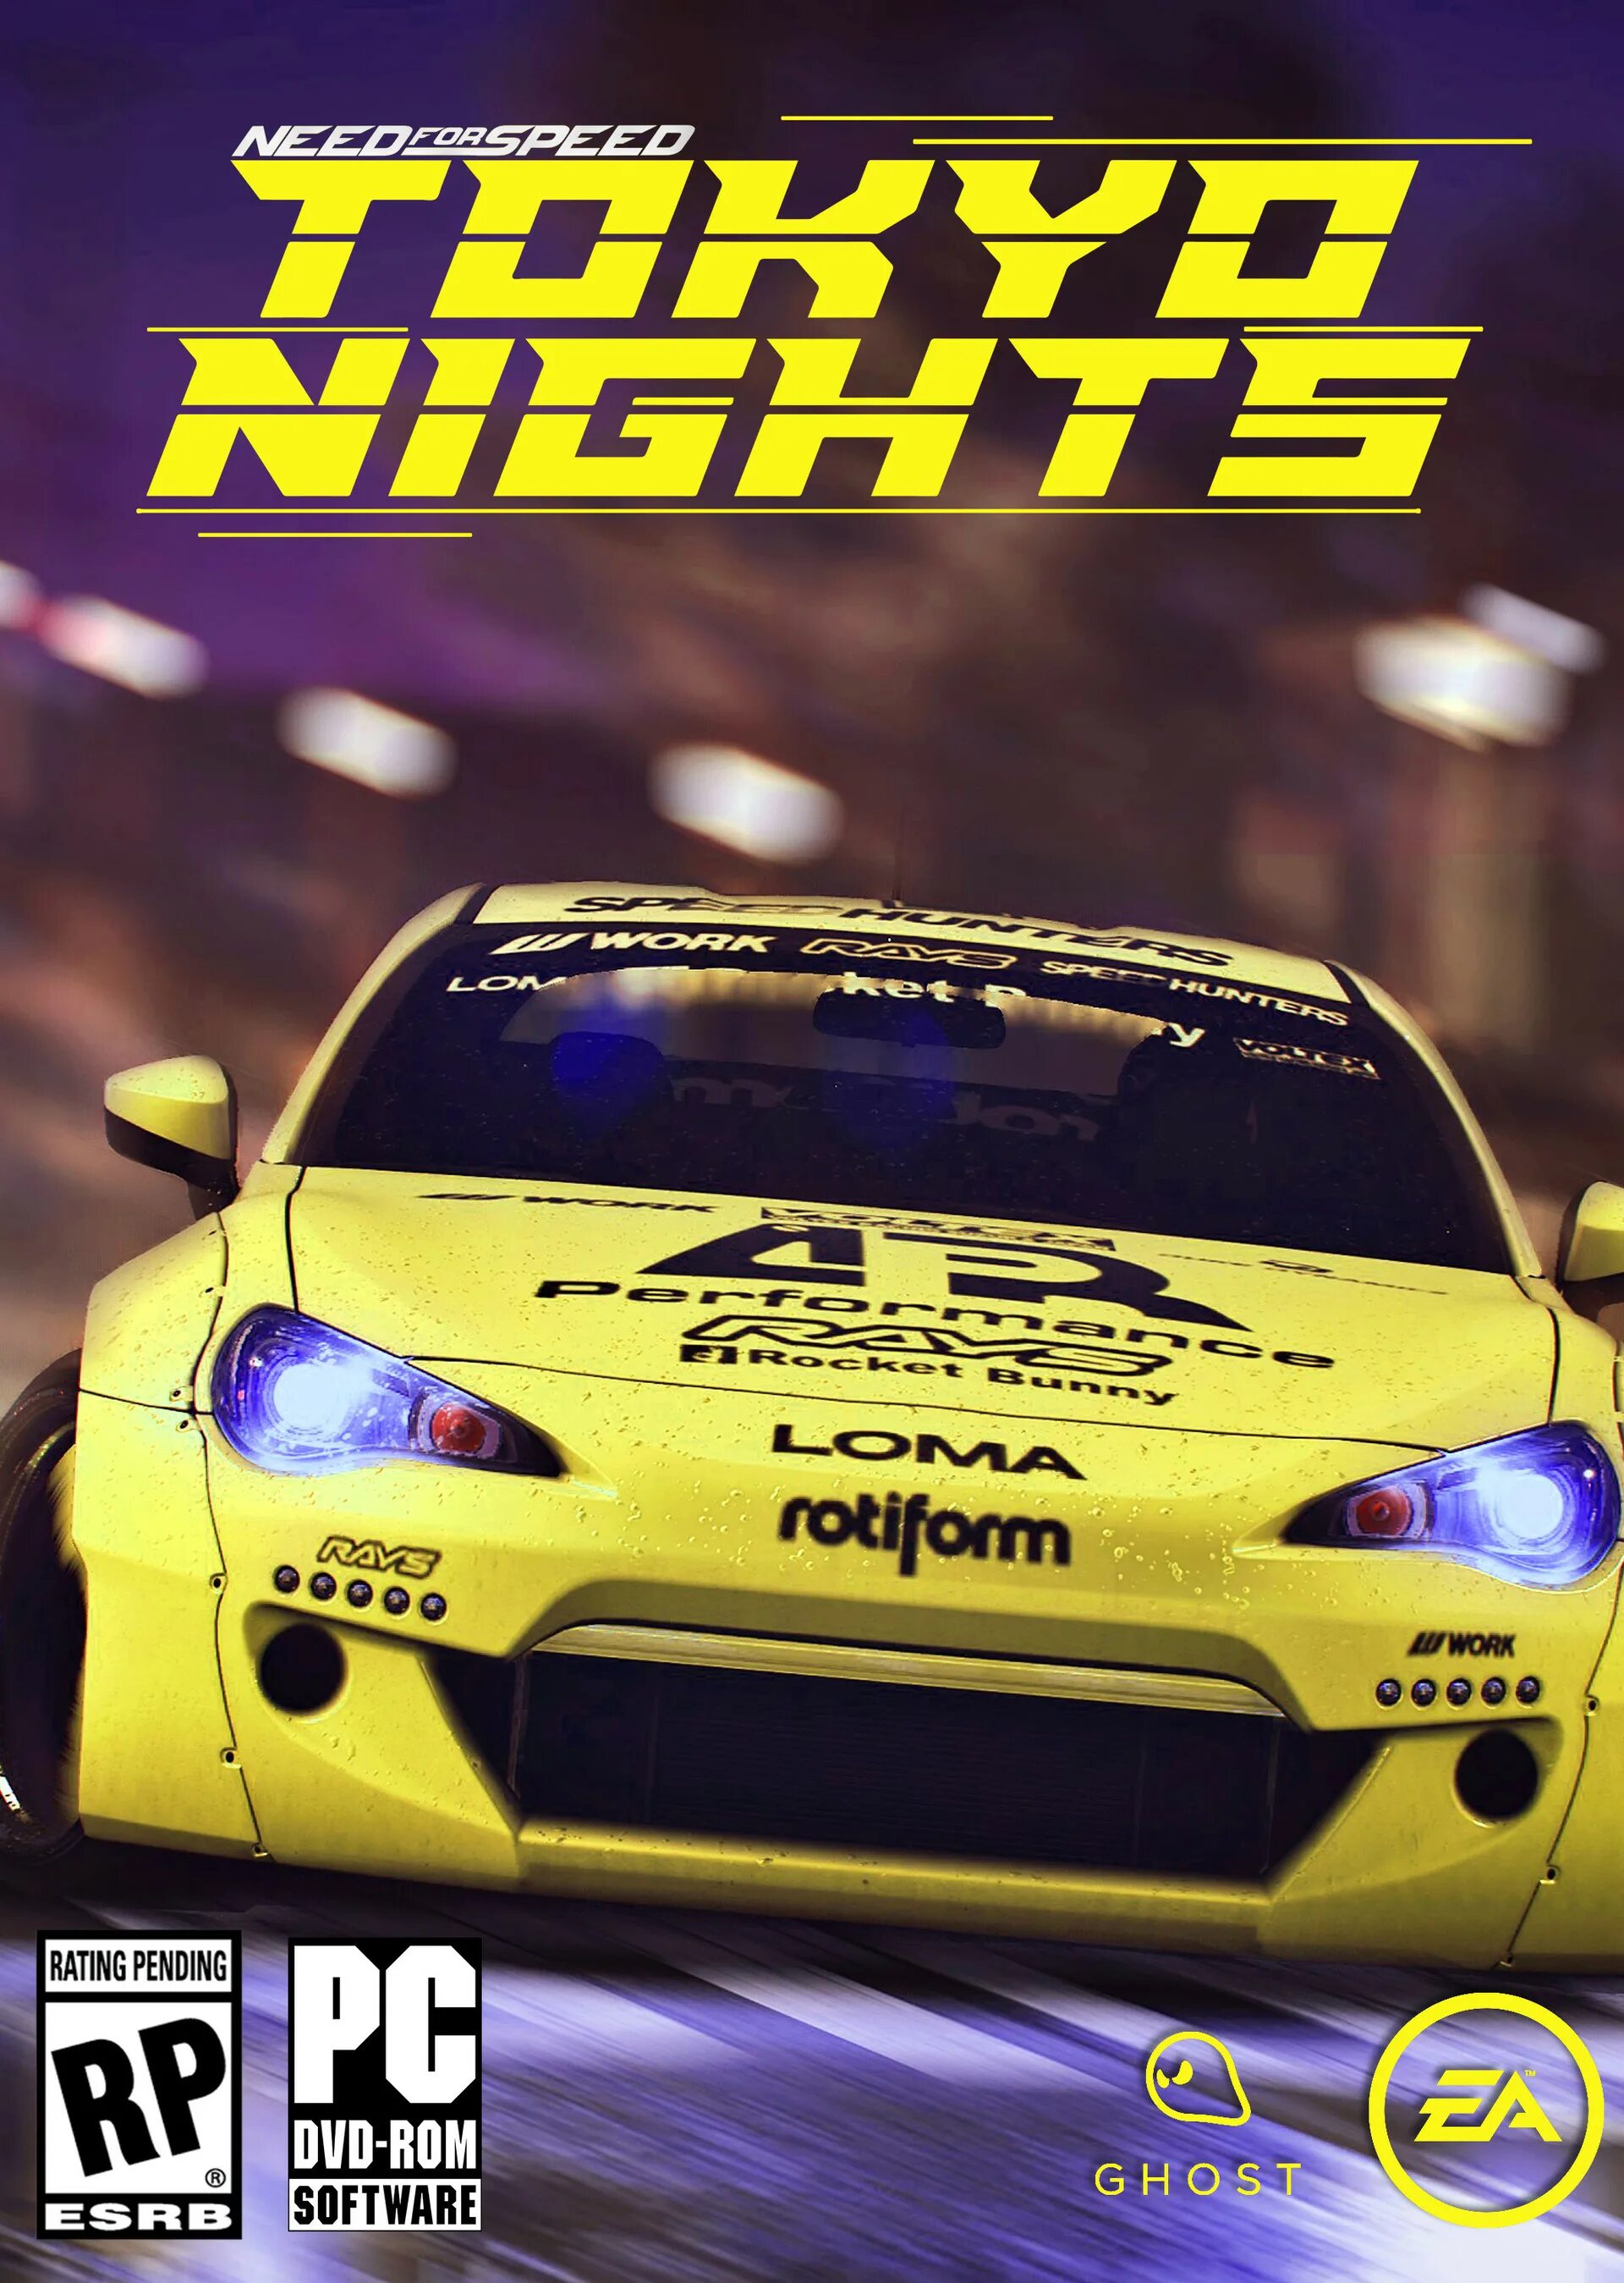 Tokyo speed. Need for Speed Tokyo Drift. Need for Speed Tokyo Nights. NFS PC Cover. Need for Speed Tokyo Nights logo.